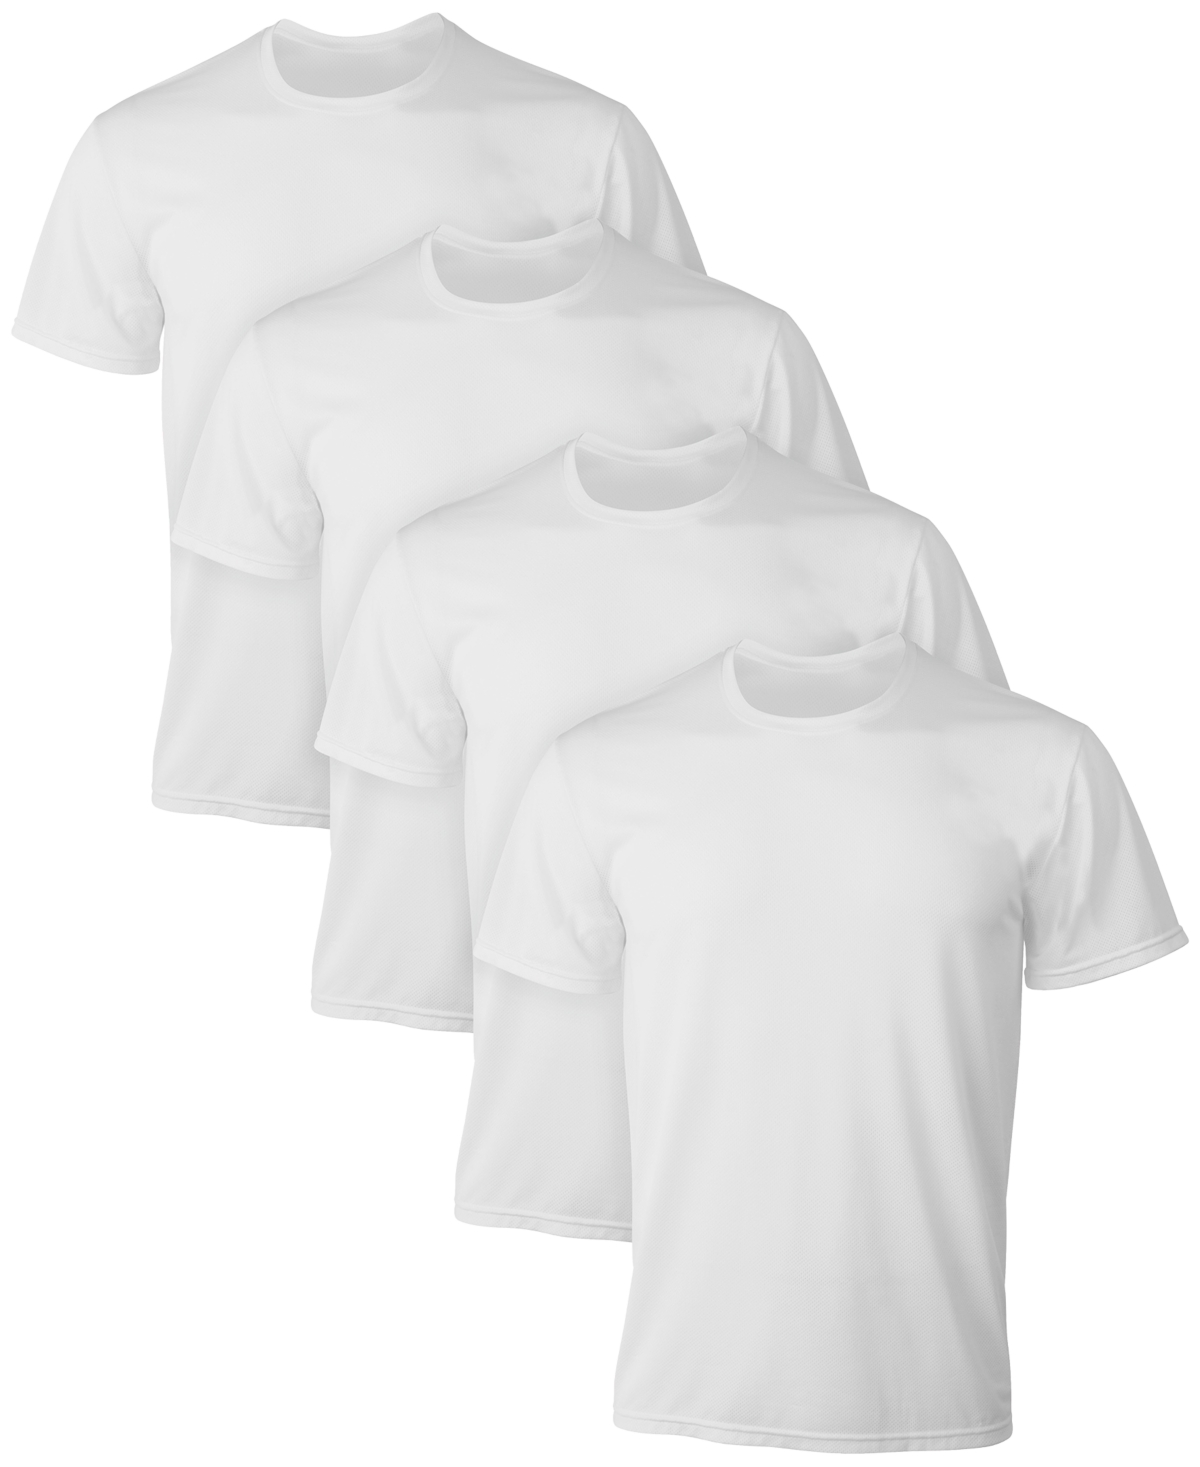 Men's Ultimate X-Temp 4-Pk. Moisture-Wicking Mesh T-Shirts - Assorted